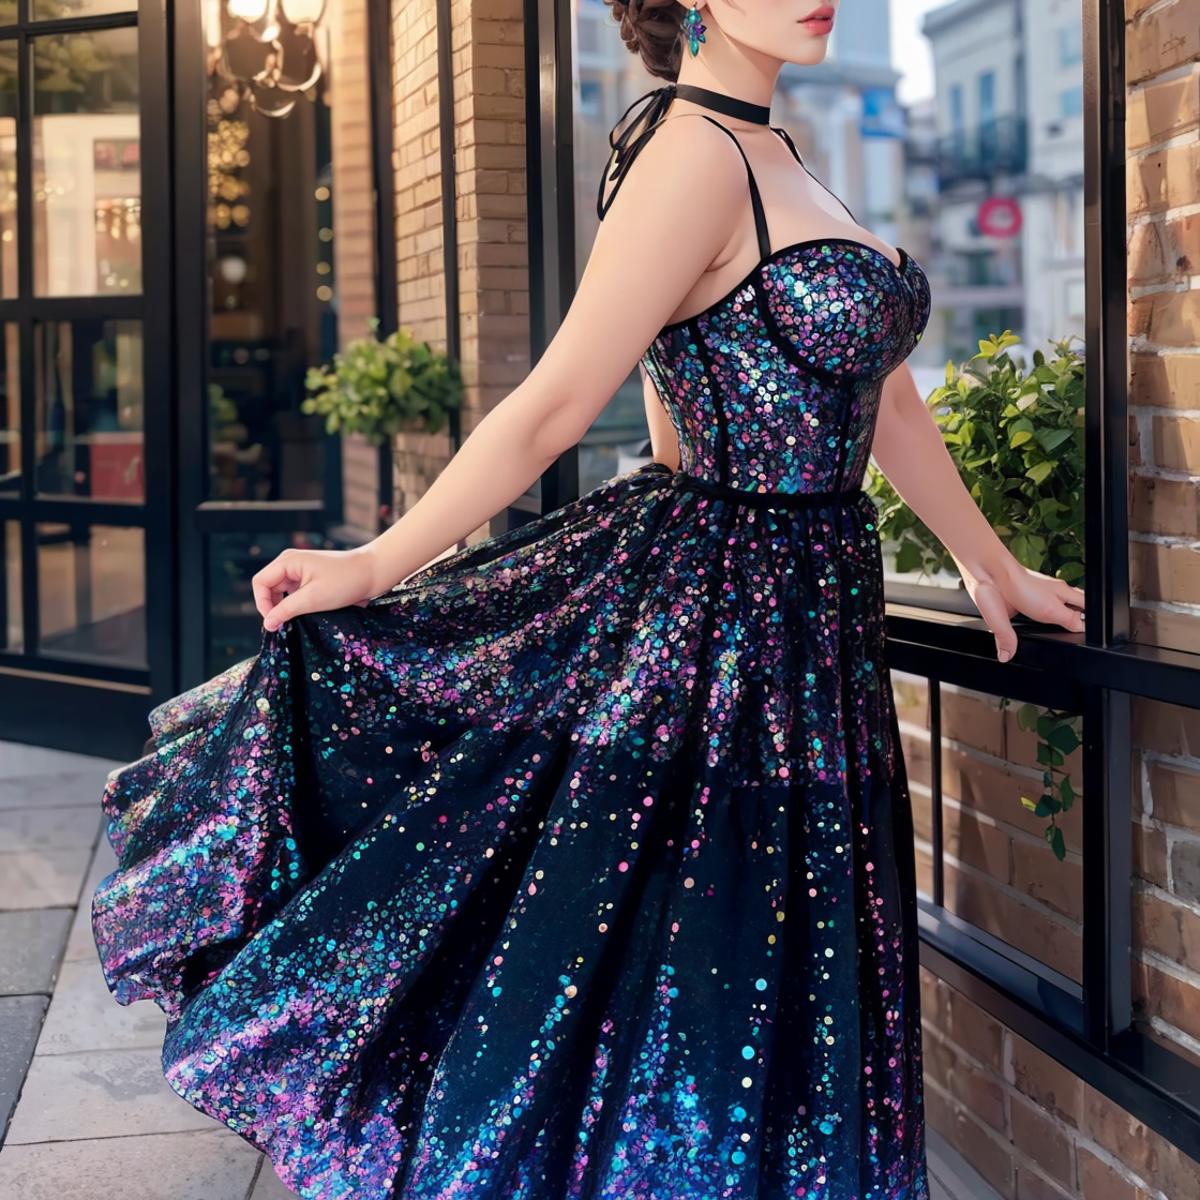 Constellation Glitter Dress image by headupdef